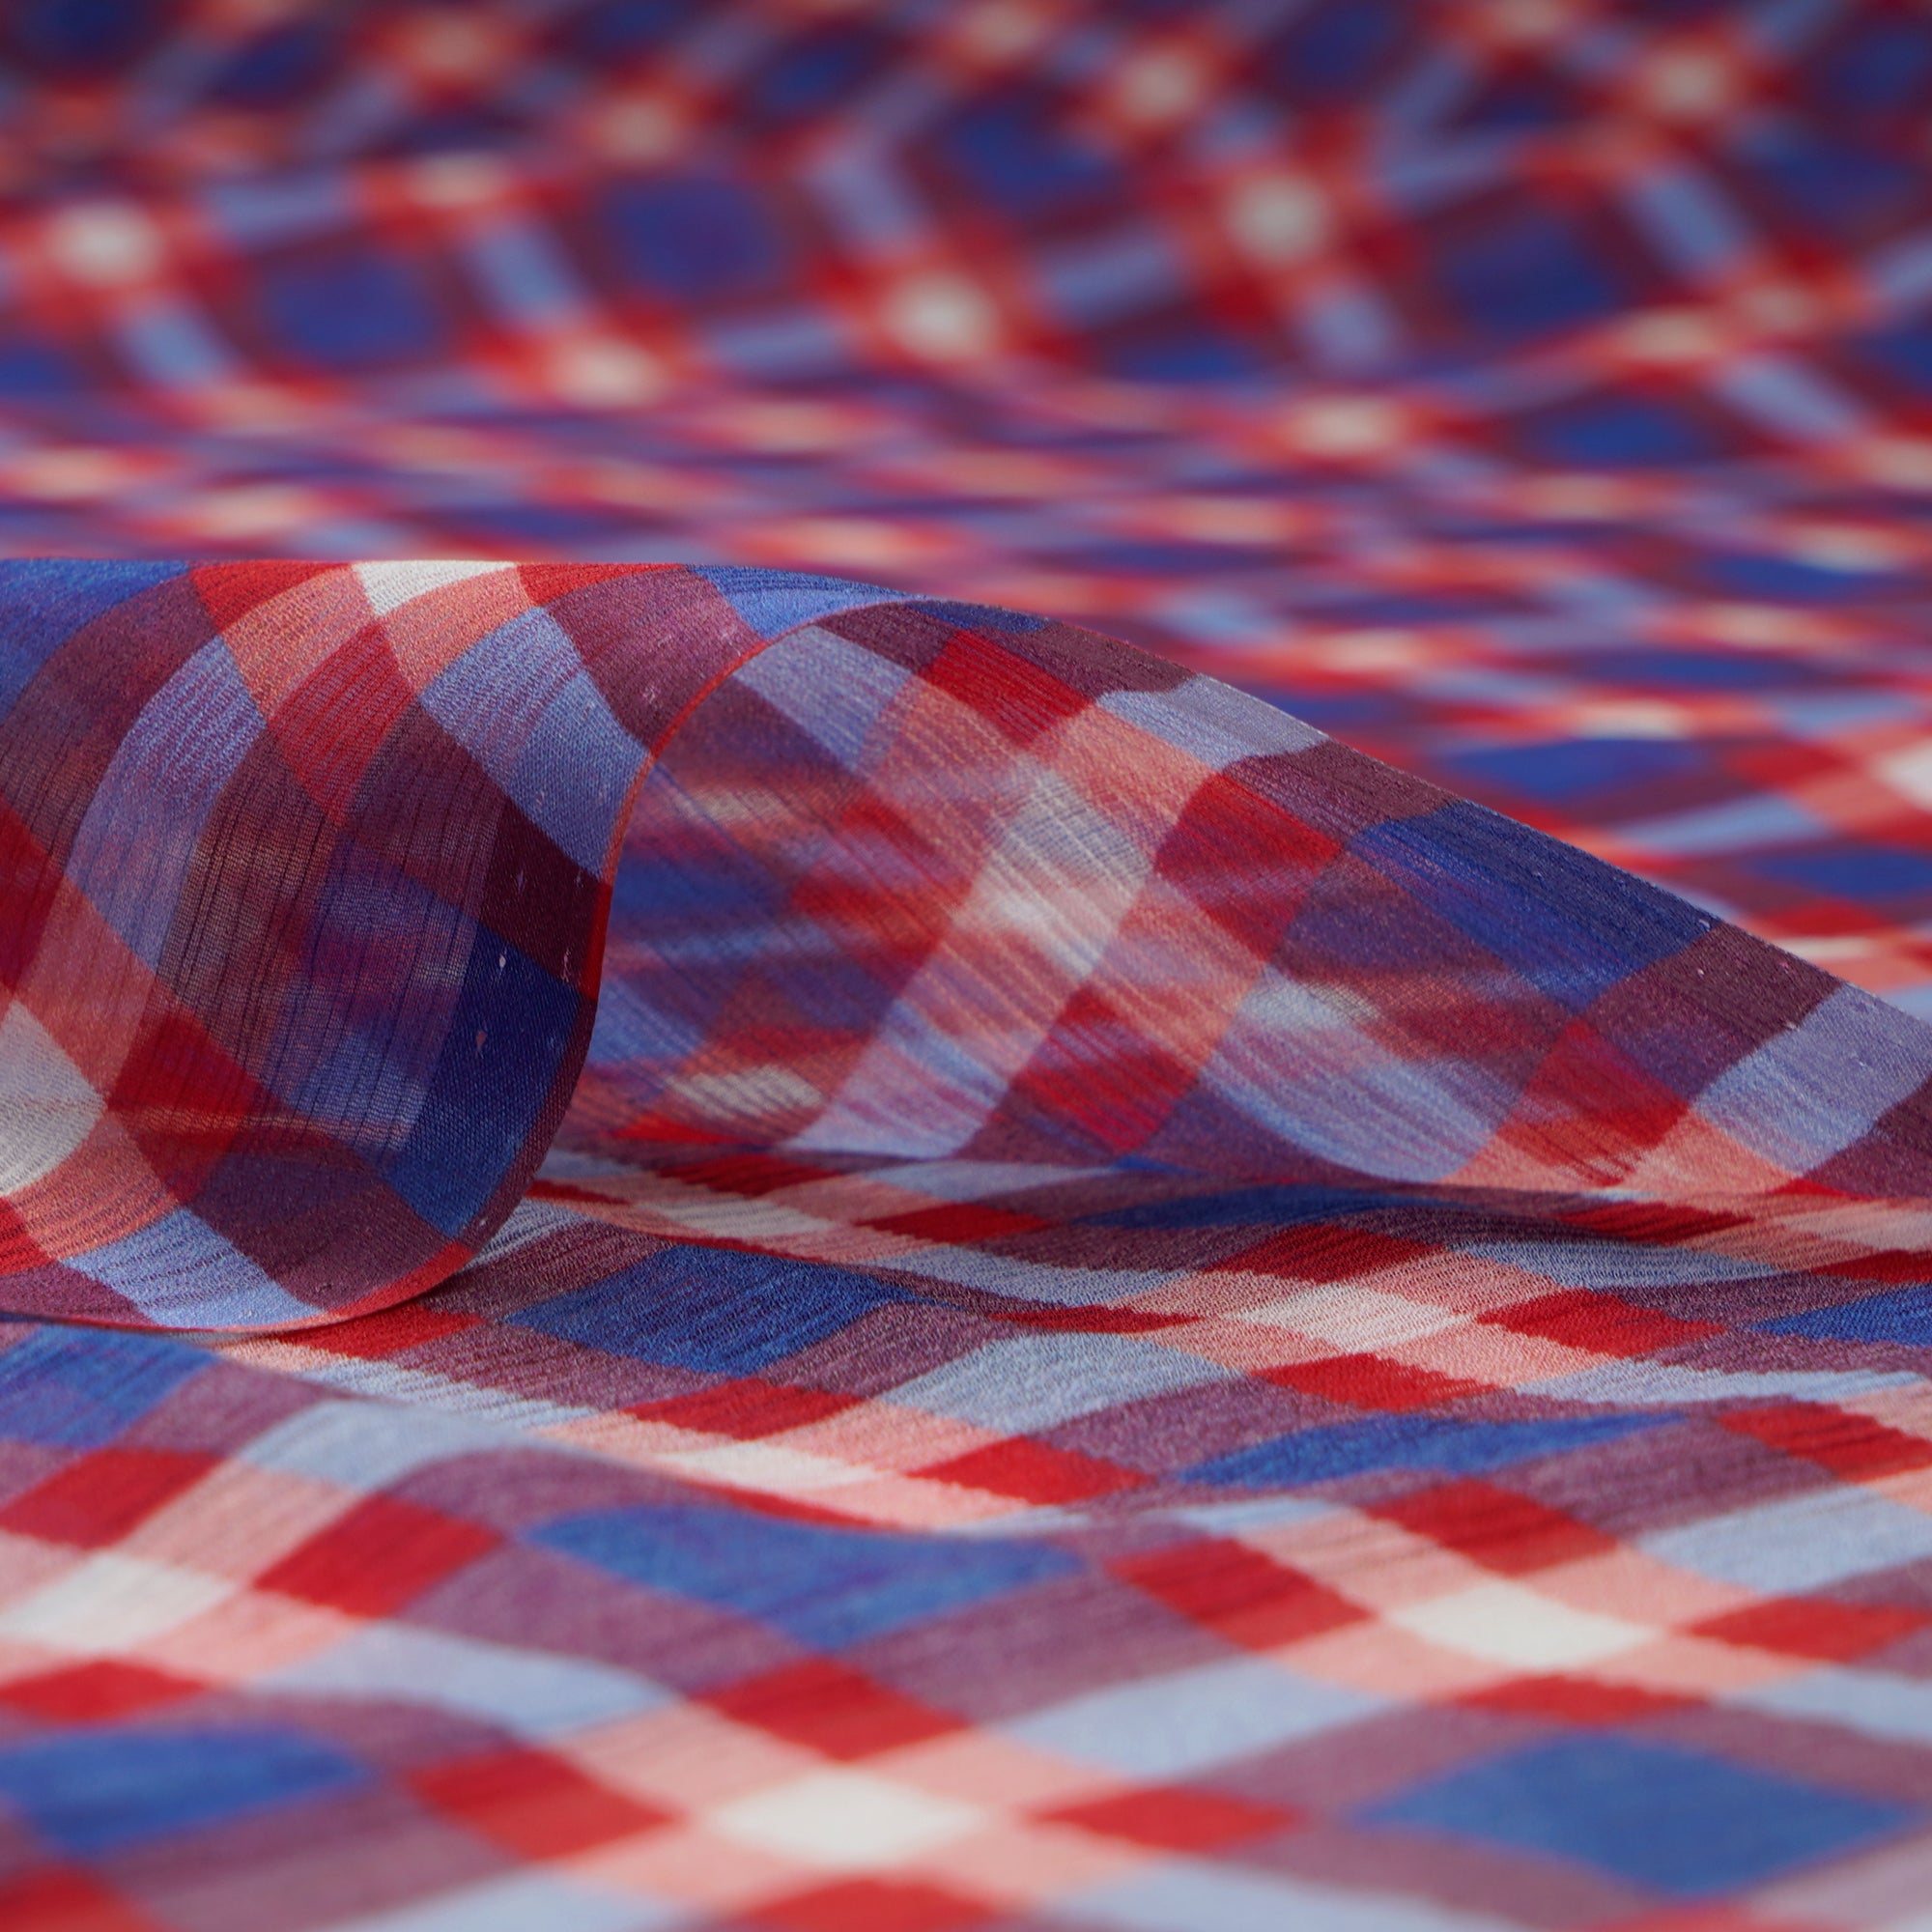 Blue-Red Check Pattern Digital Print Chiffon Silk Fabric